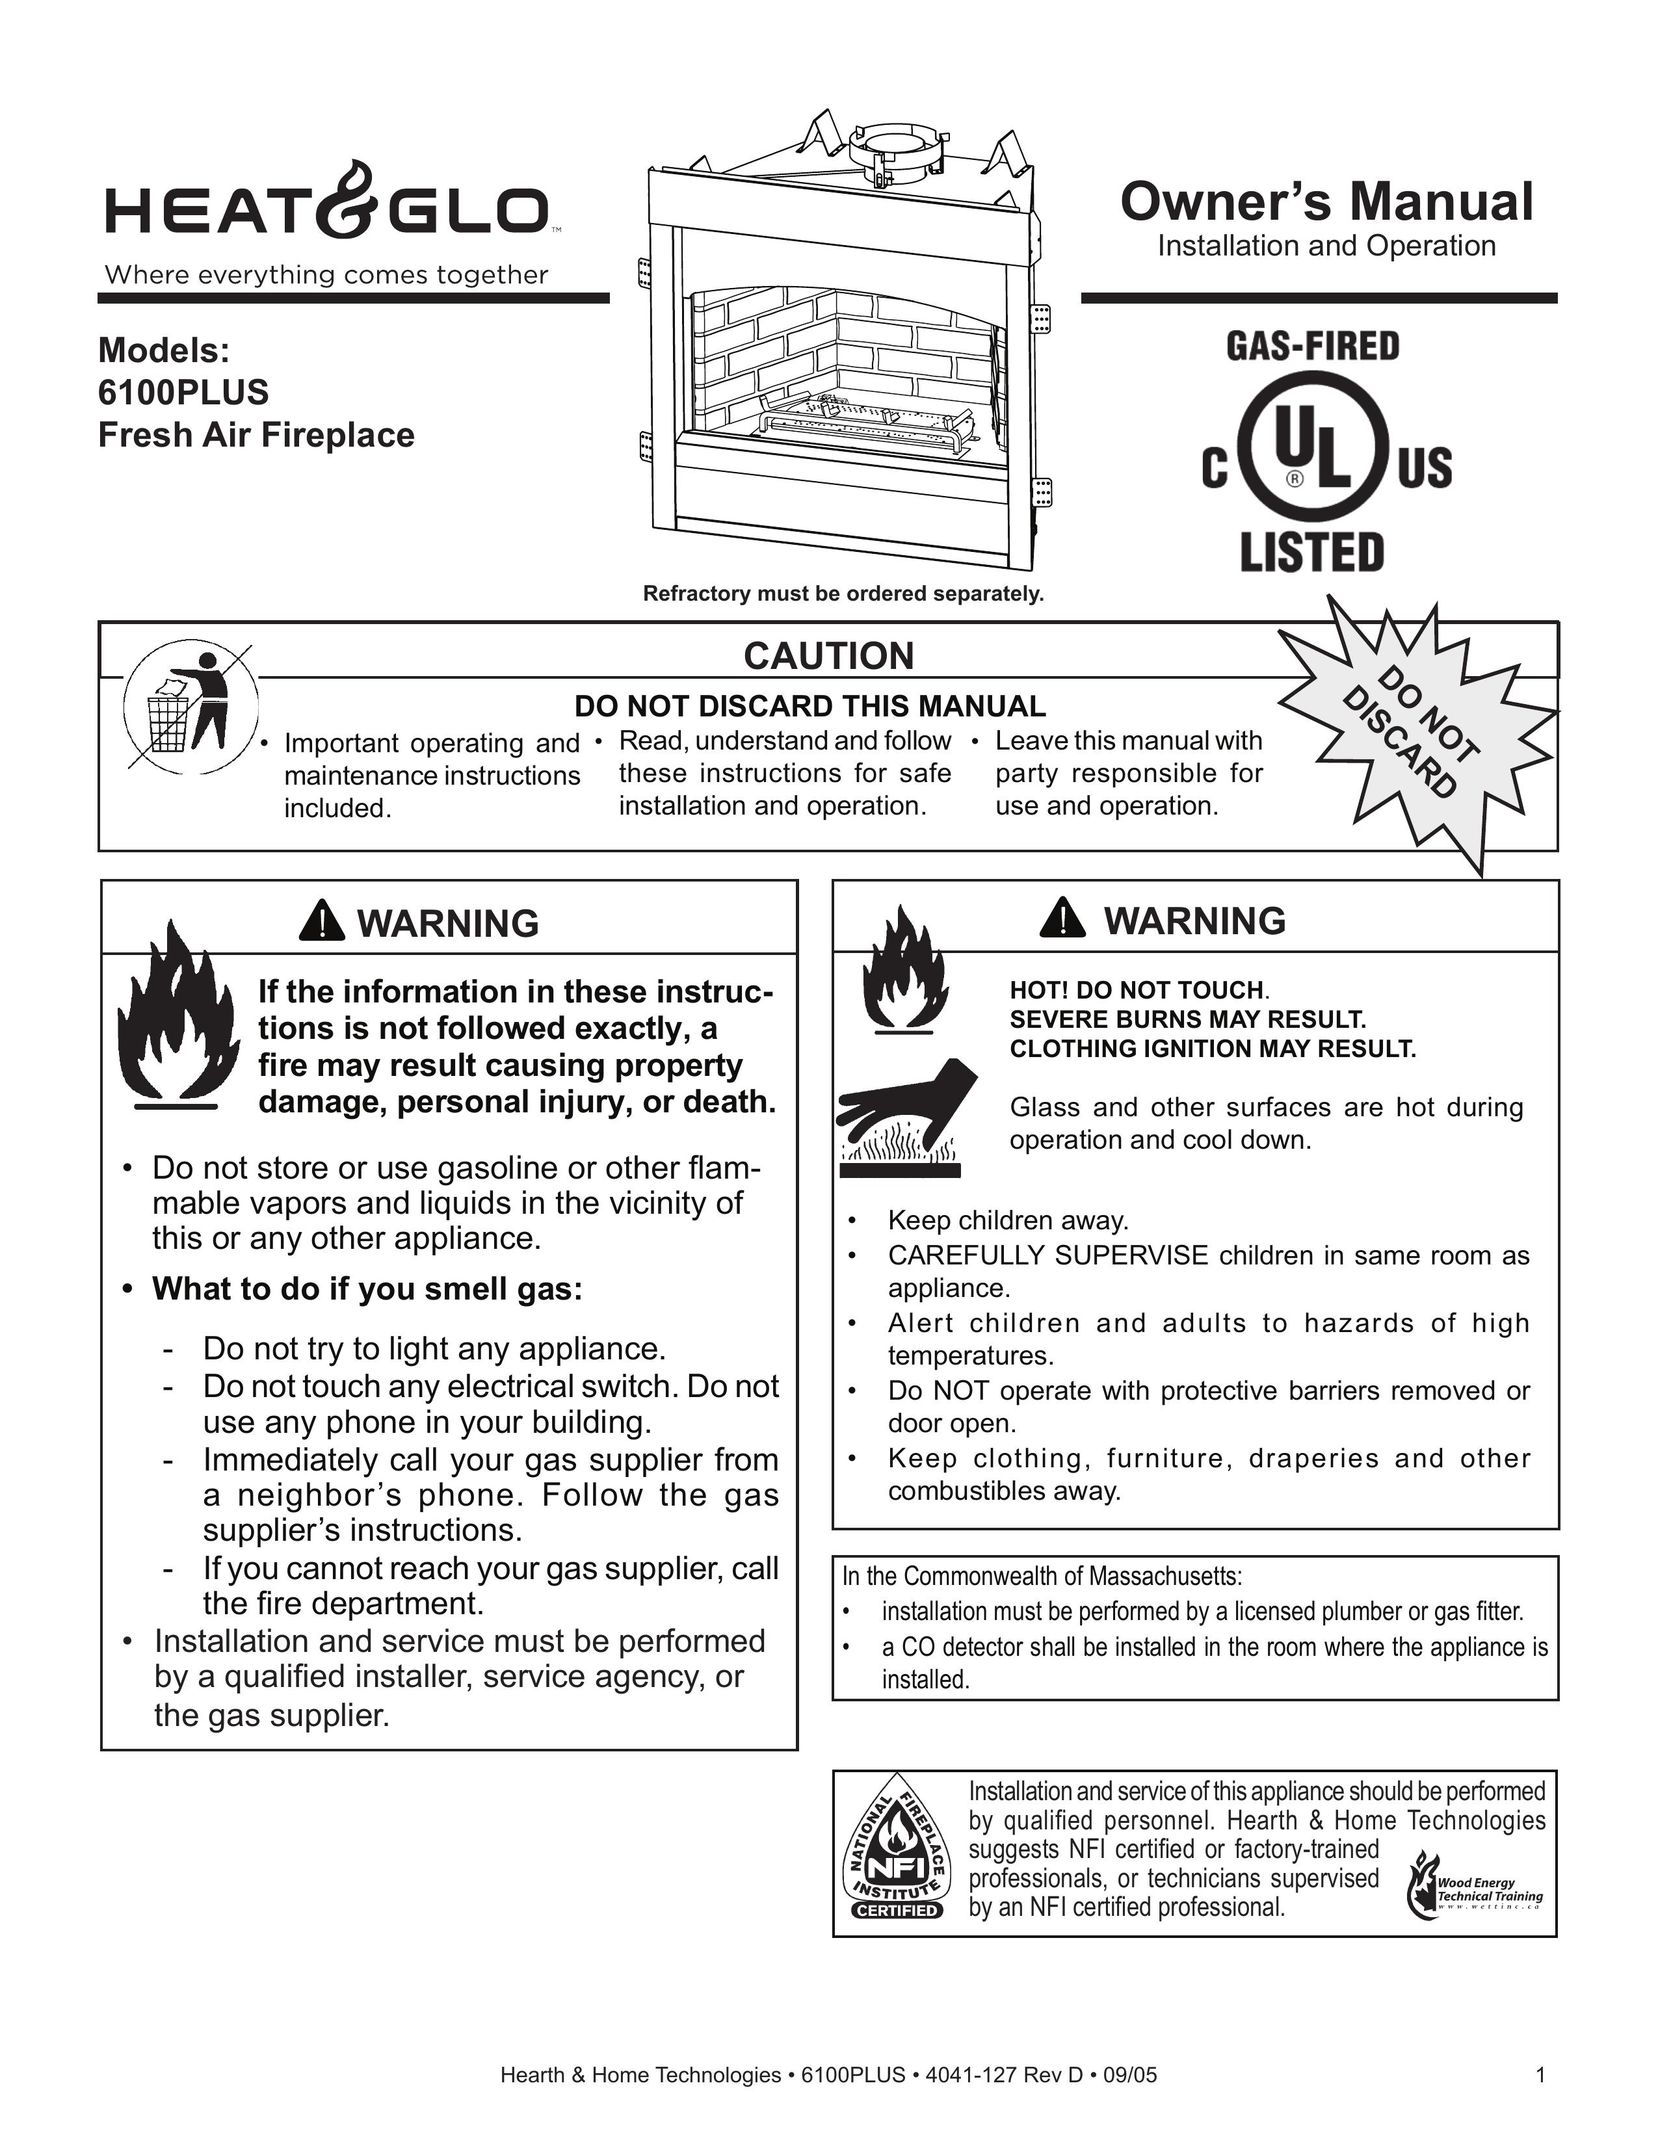 Heat & Glo LifeStyle 6100PLUS Indoor Fireplace User Manual